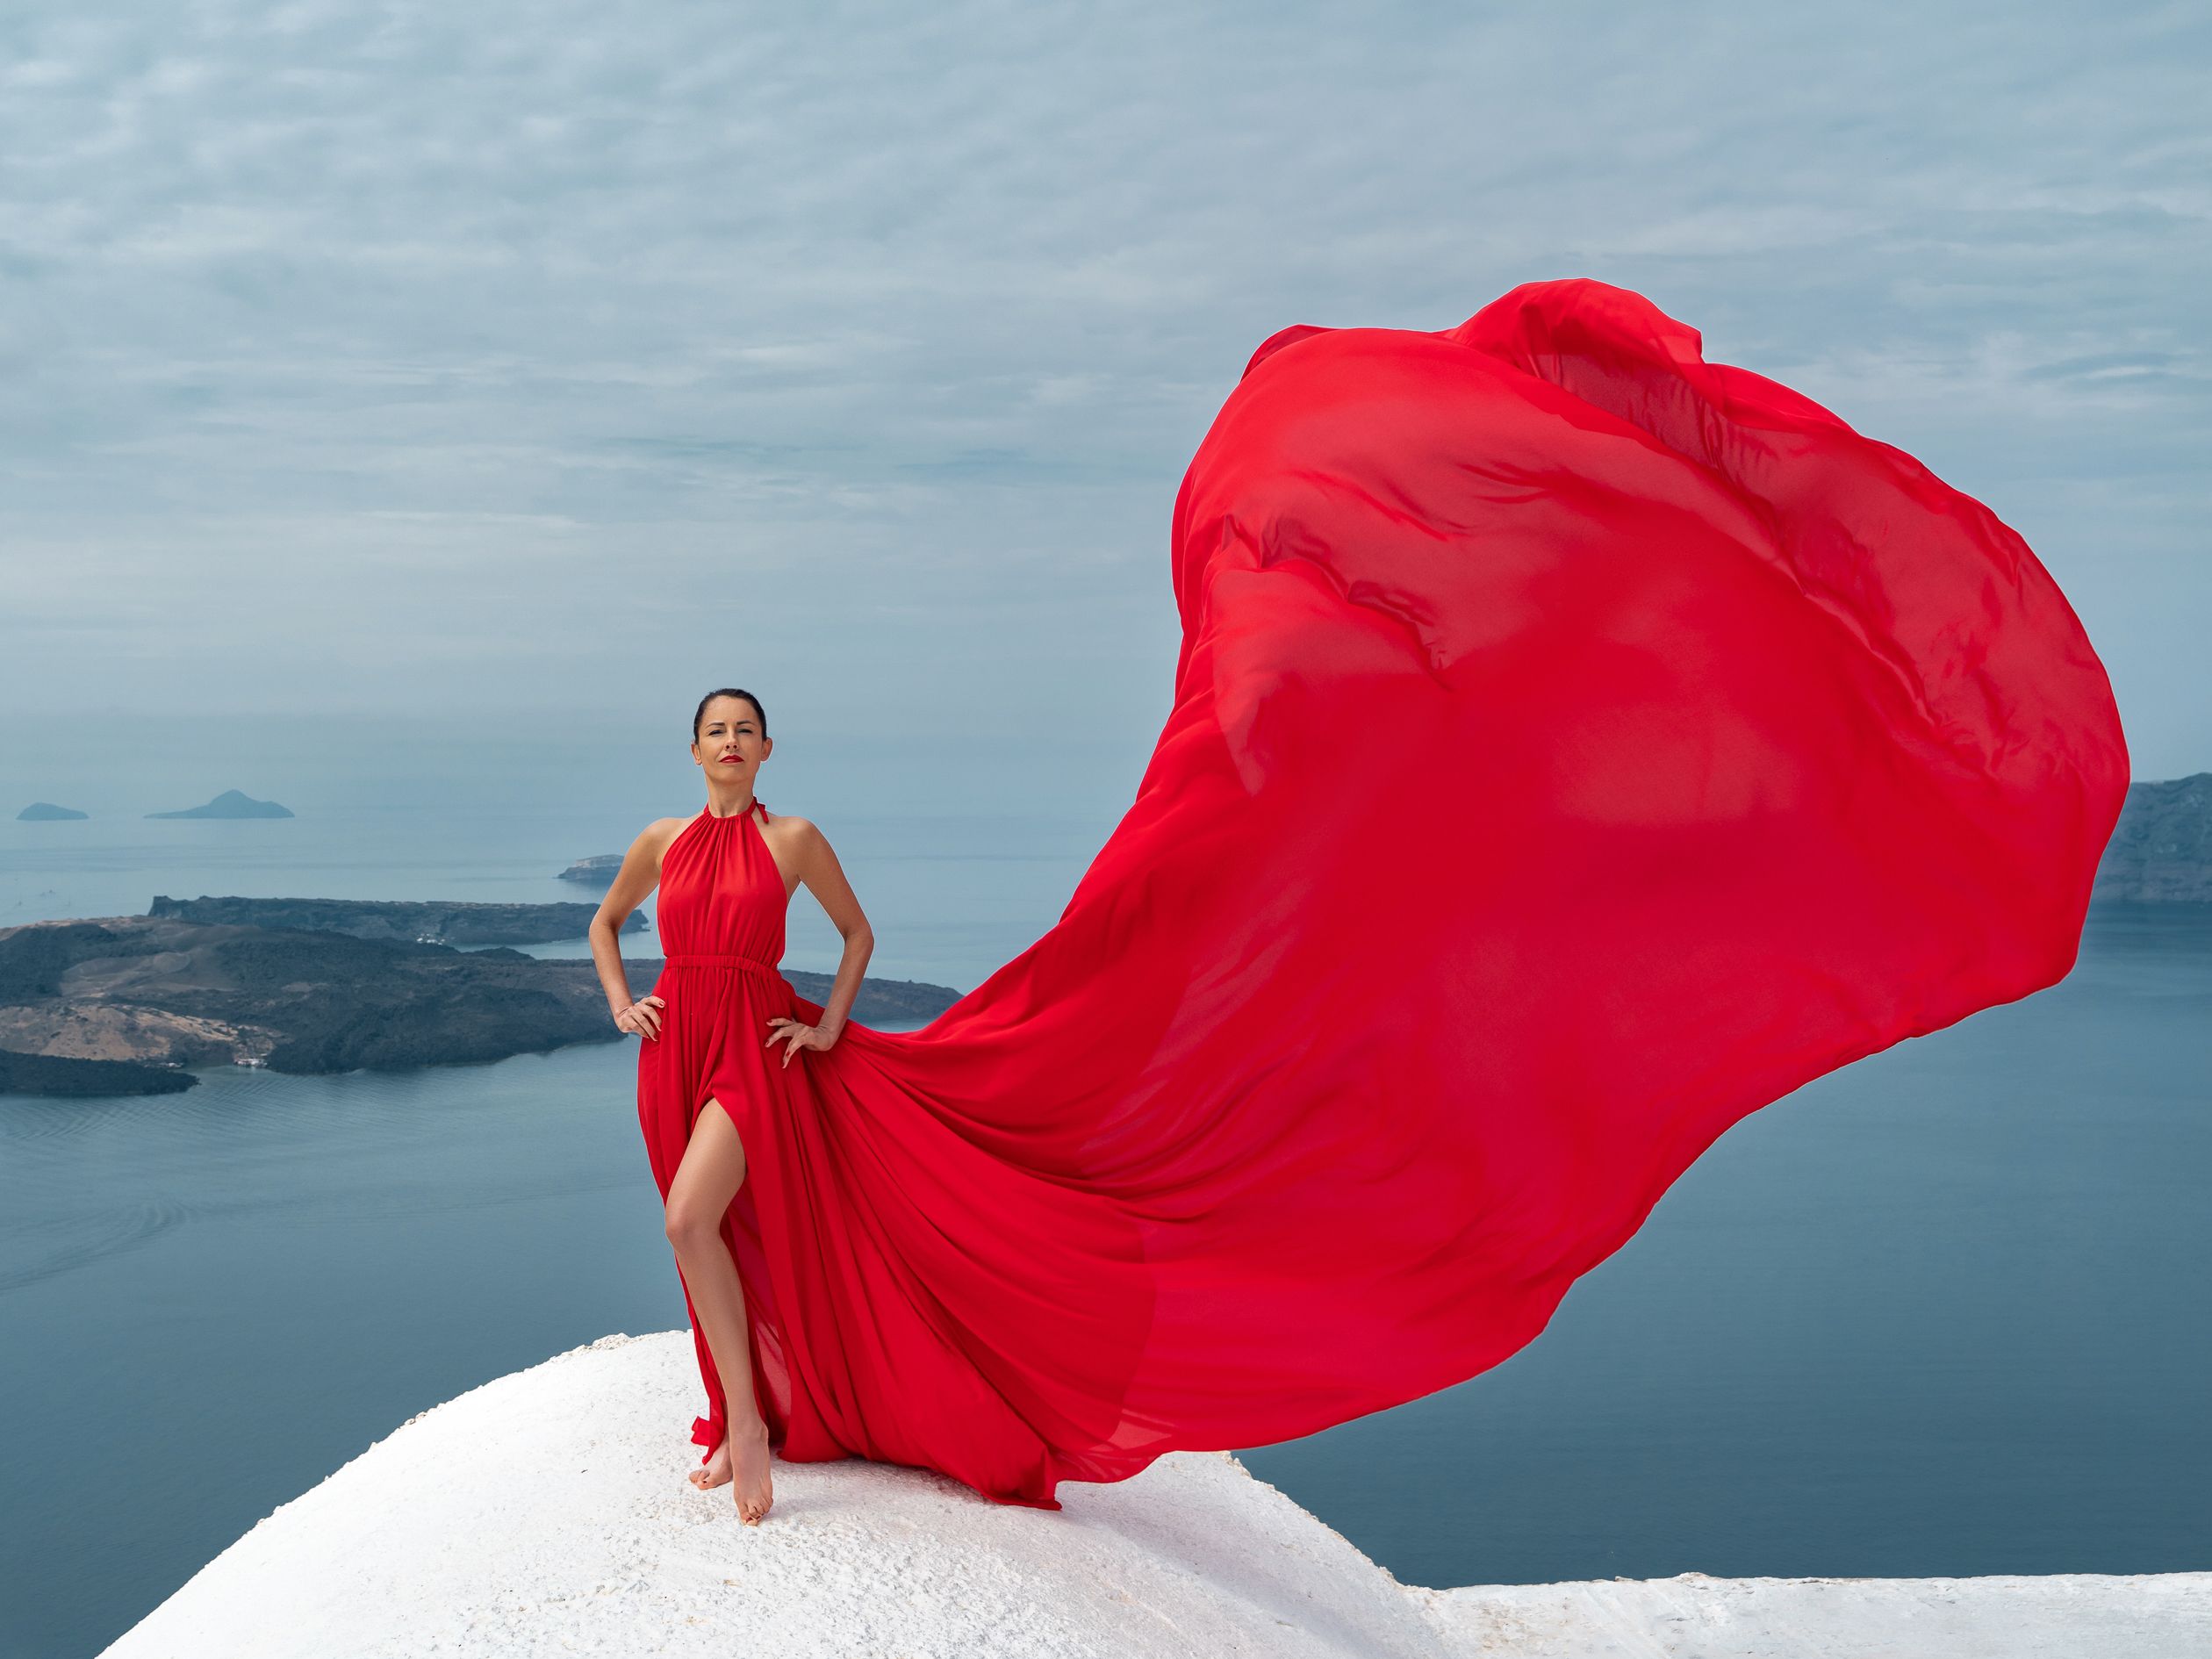 Red Flying Dress photoshoot in Santorini, Greece